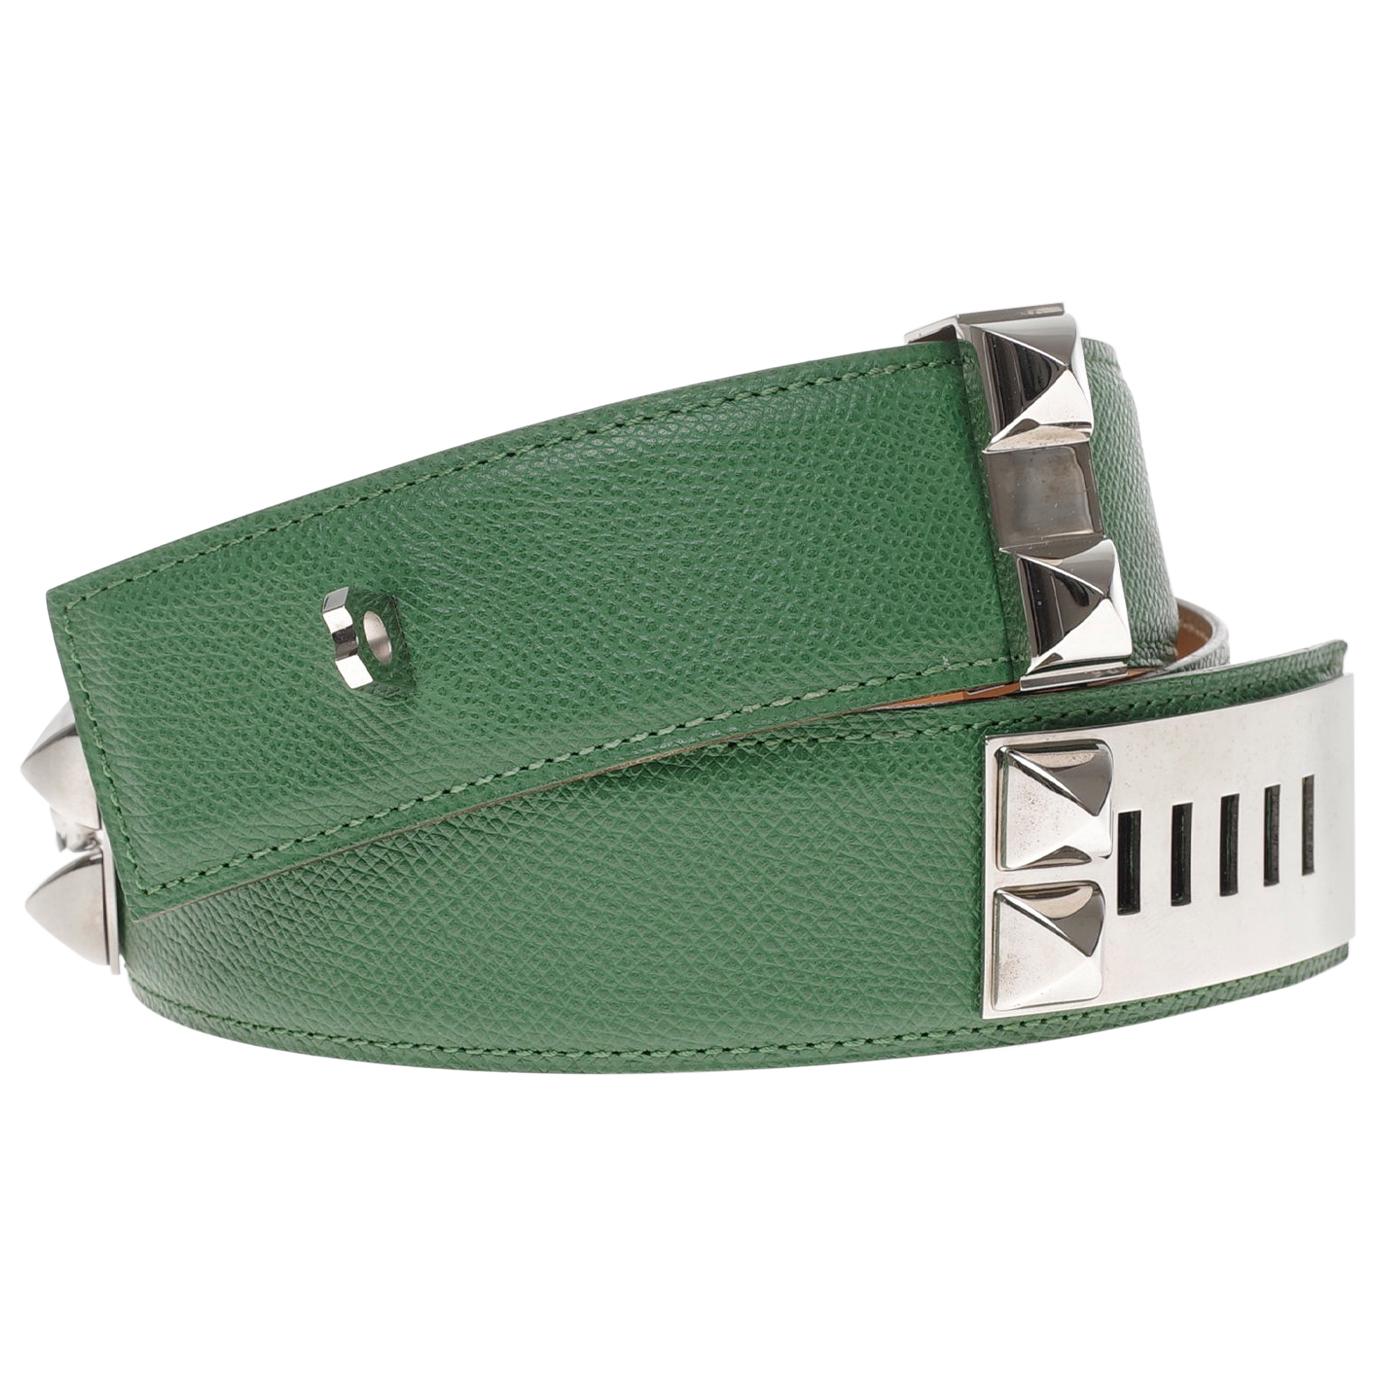 Chic Hermès belt "Collier de chien" Médor in green epsom leather, silver hardware